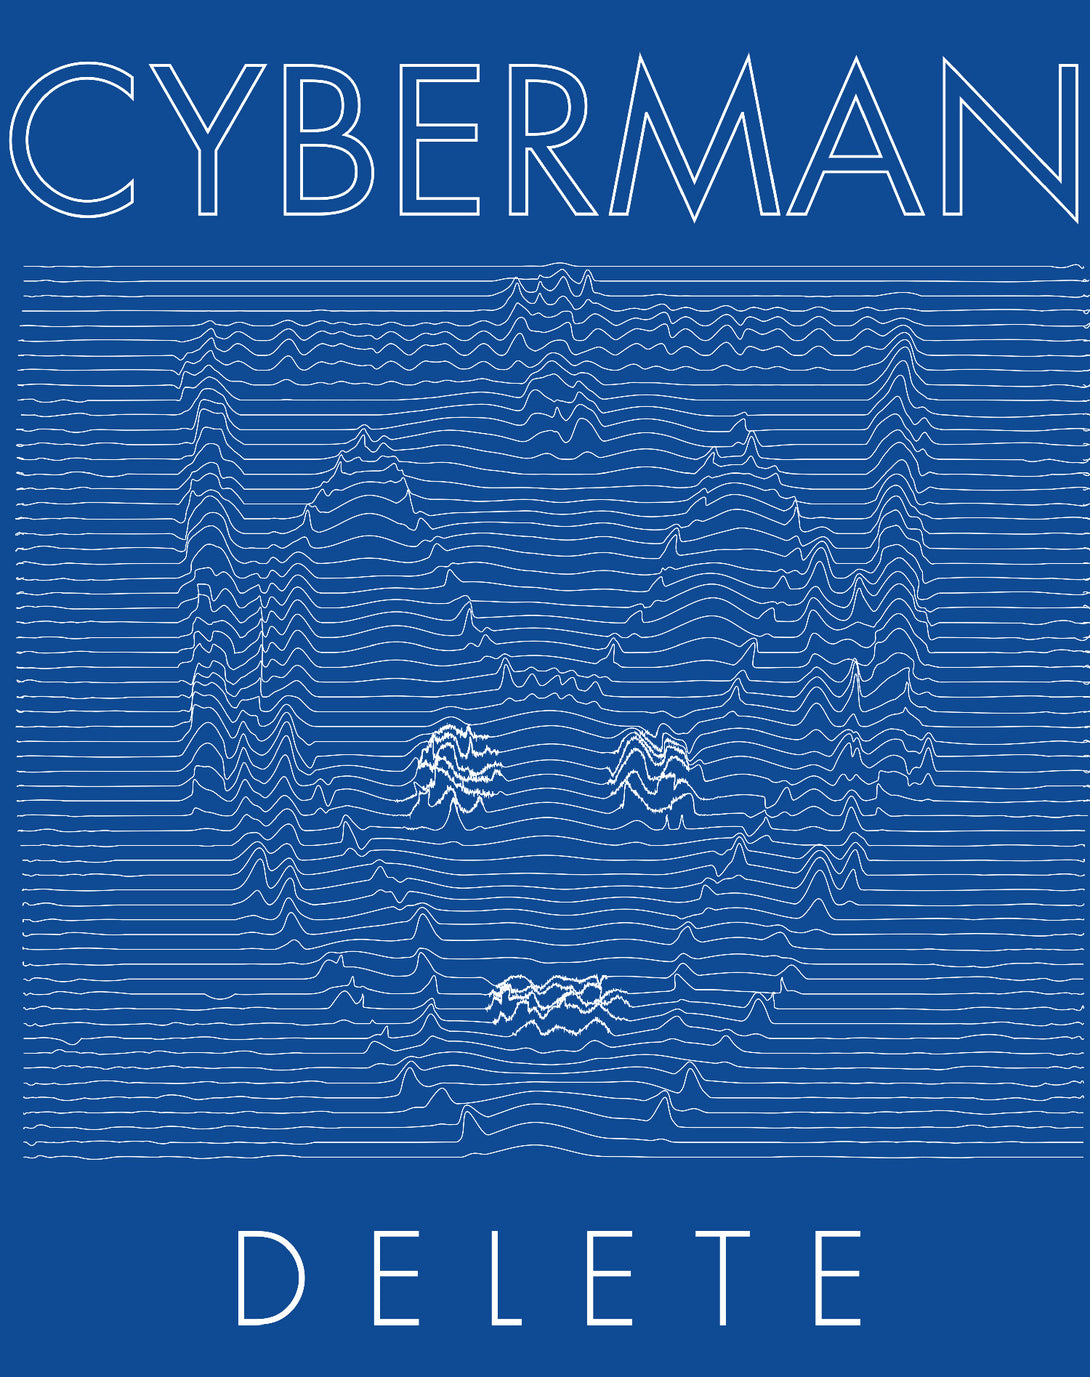 Doctor Who Spacetime-Tour Cybermen Official Sweatshirt Blue - Urban Species Design Close Up